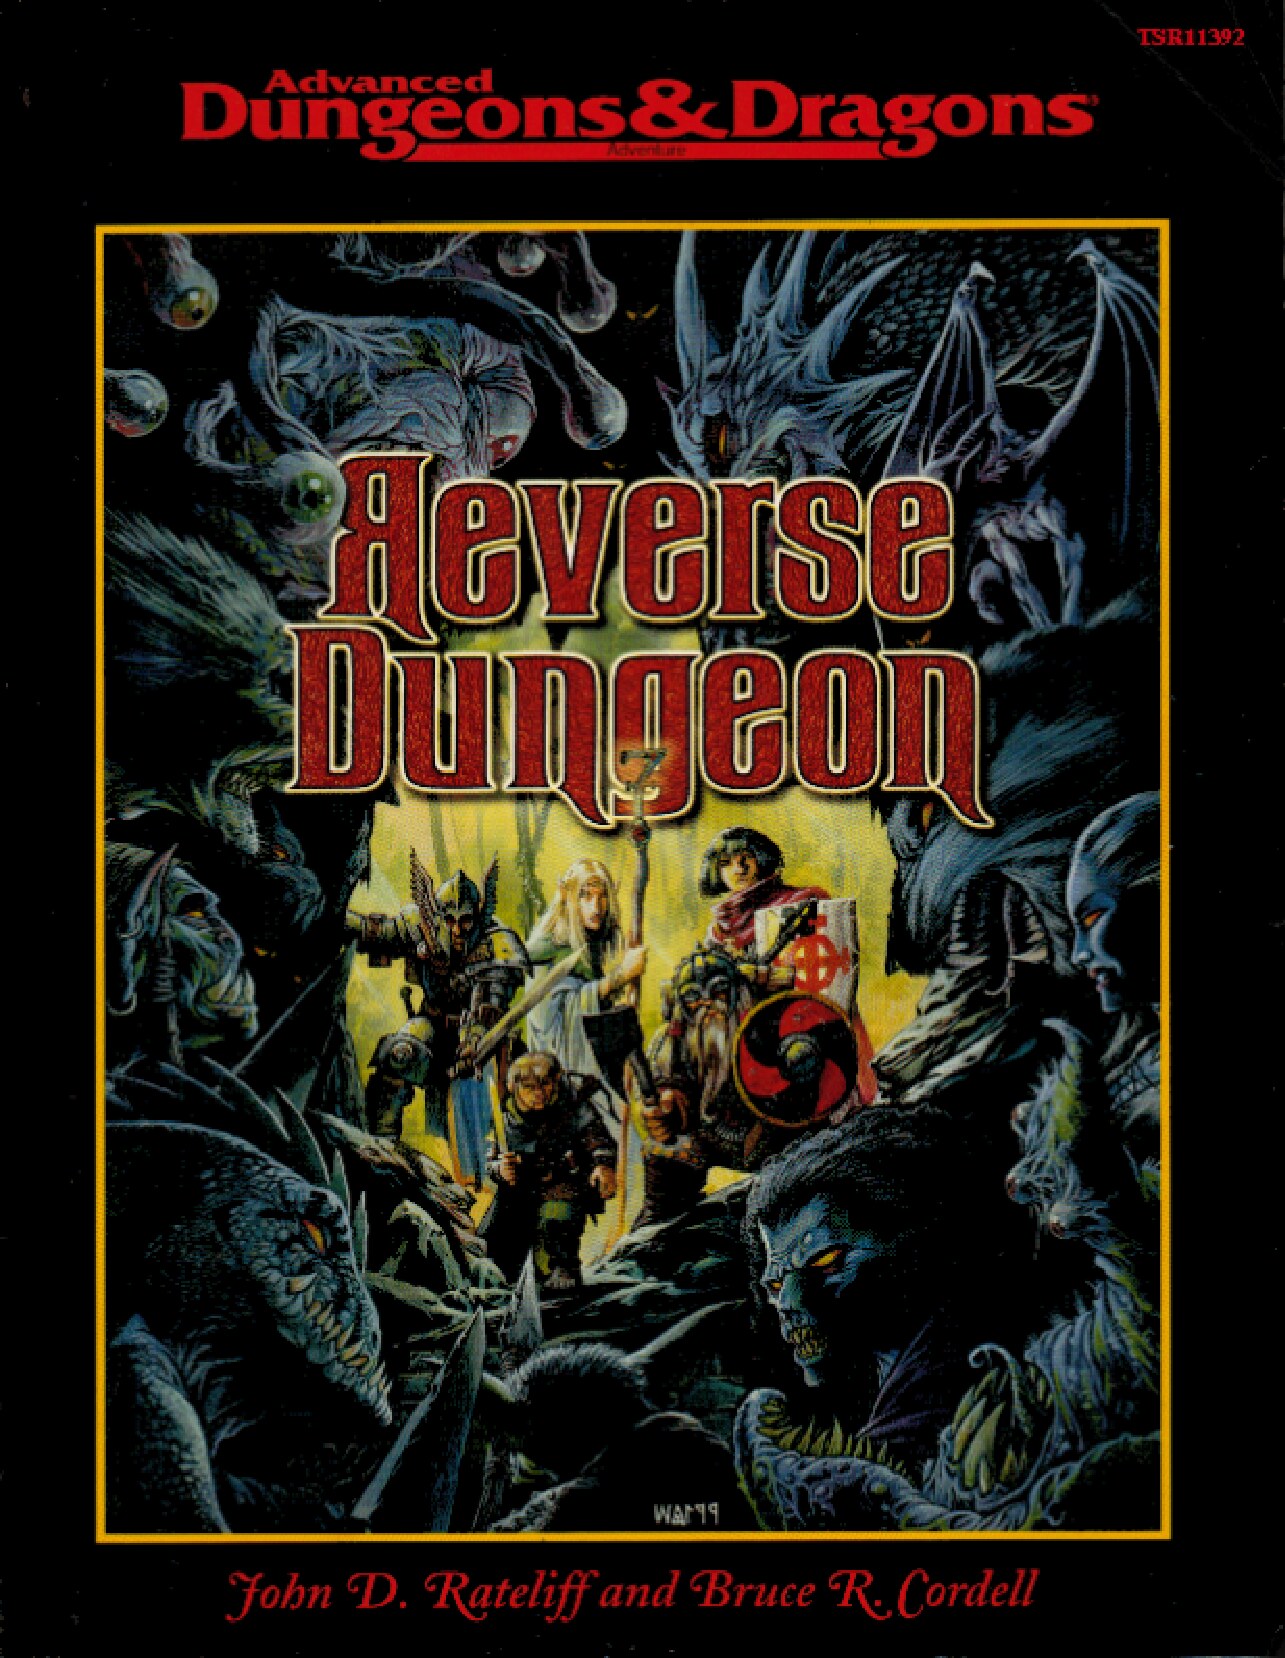 TSR 11392 Reverse Dungeon